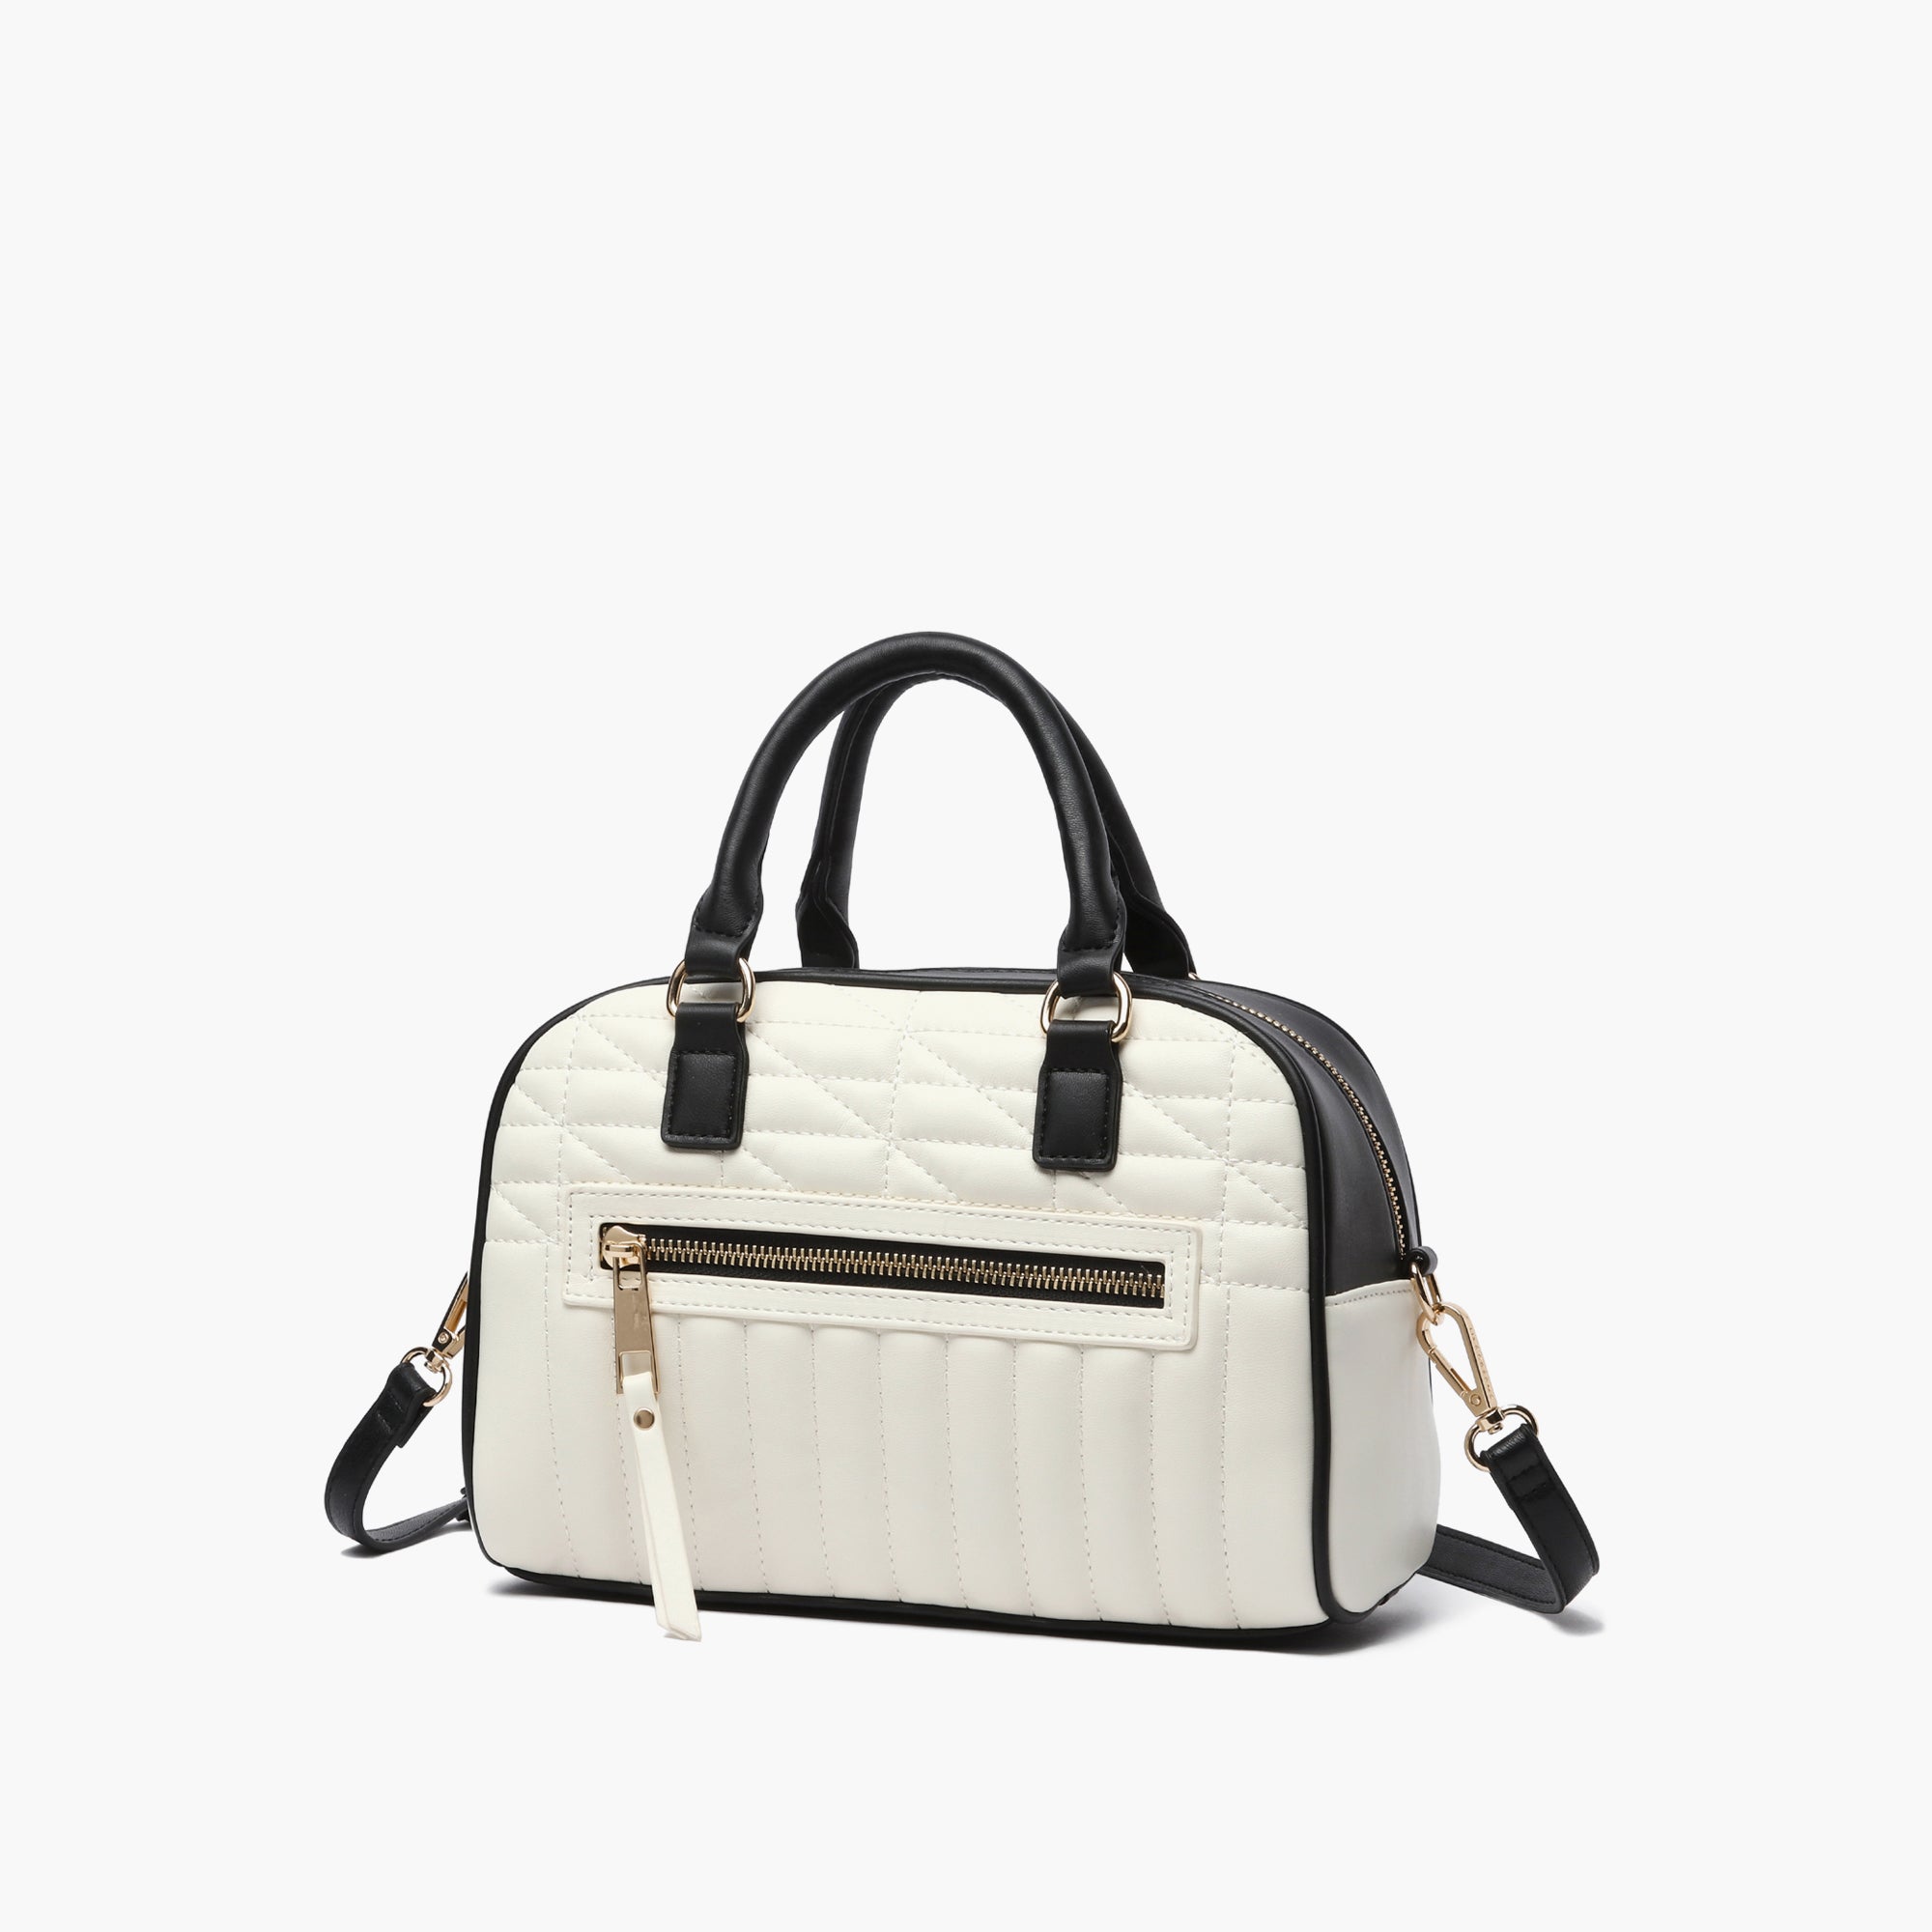 GUESS womens Naya Double Zip Crossbody, Brown, One Size US: Handbags:  Amazon.com